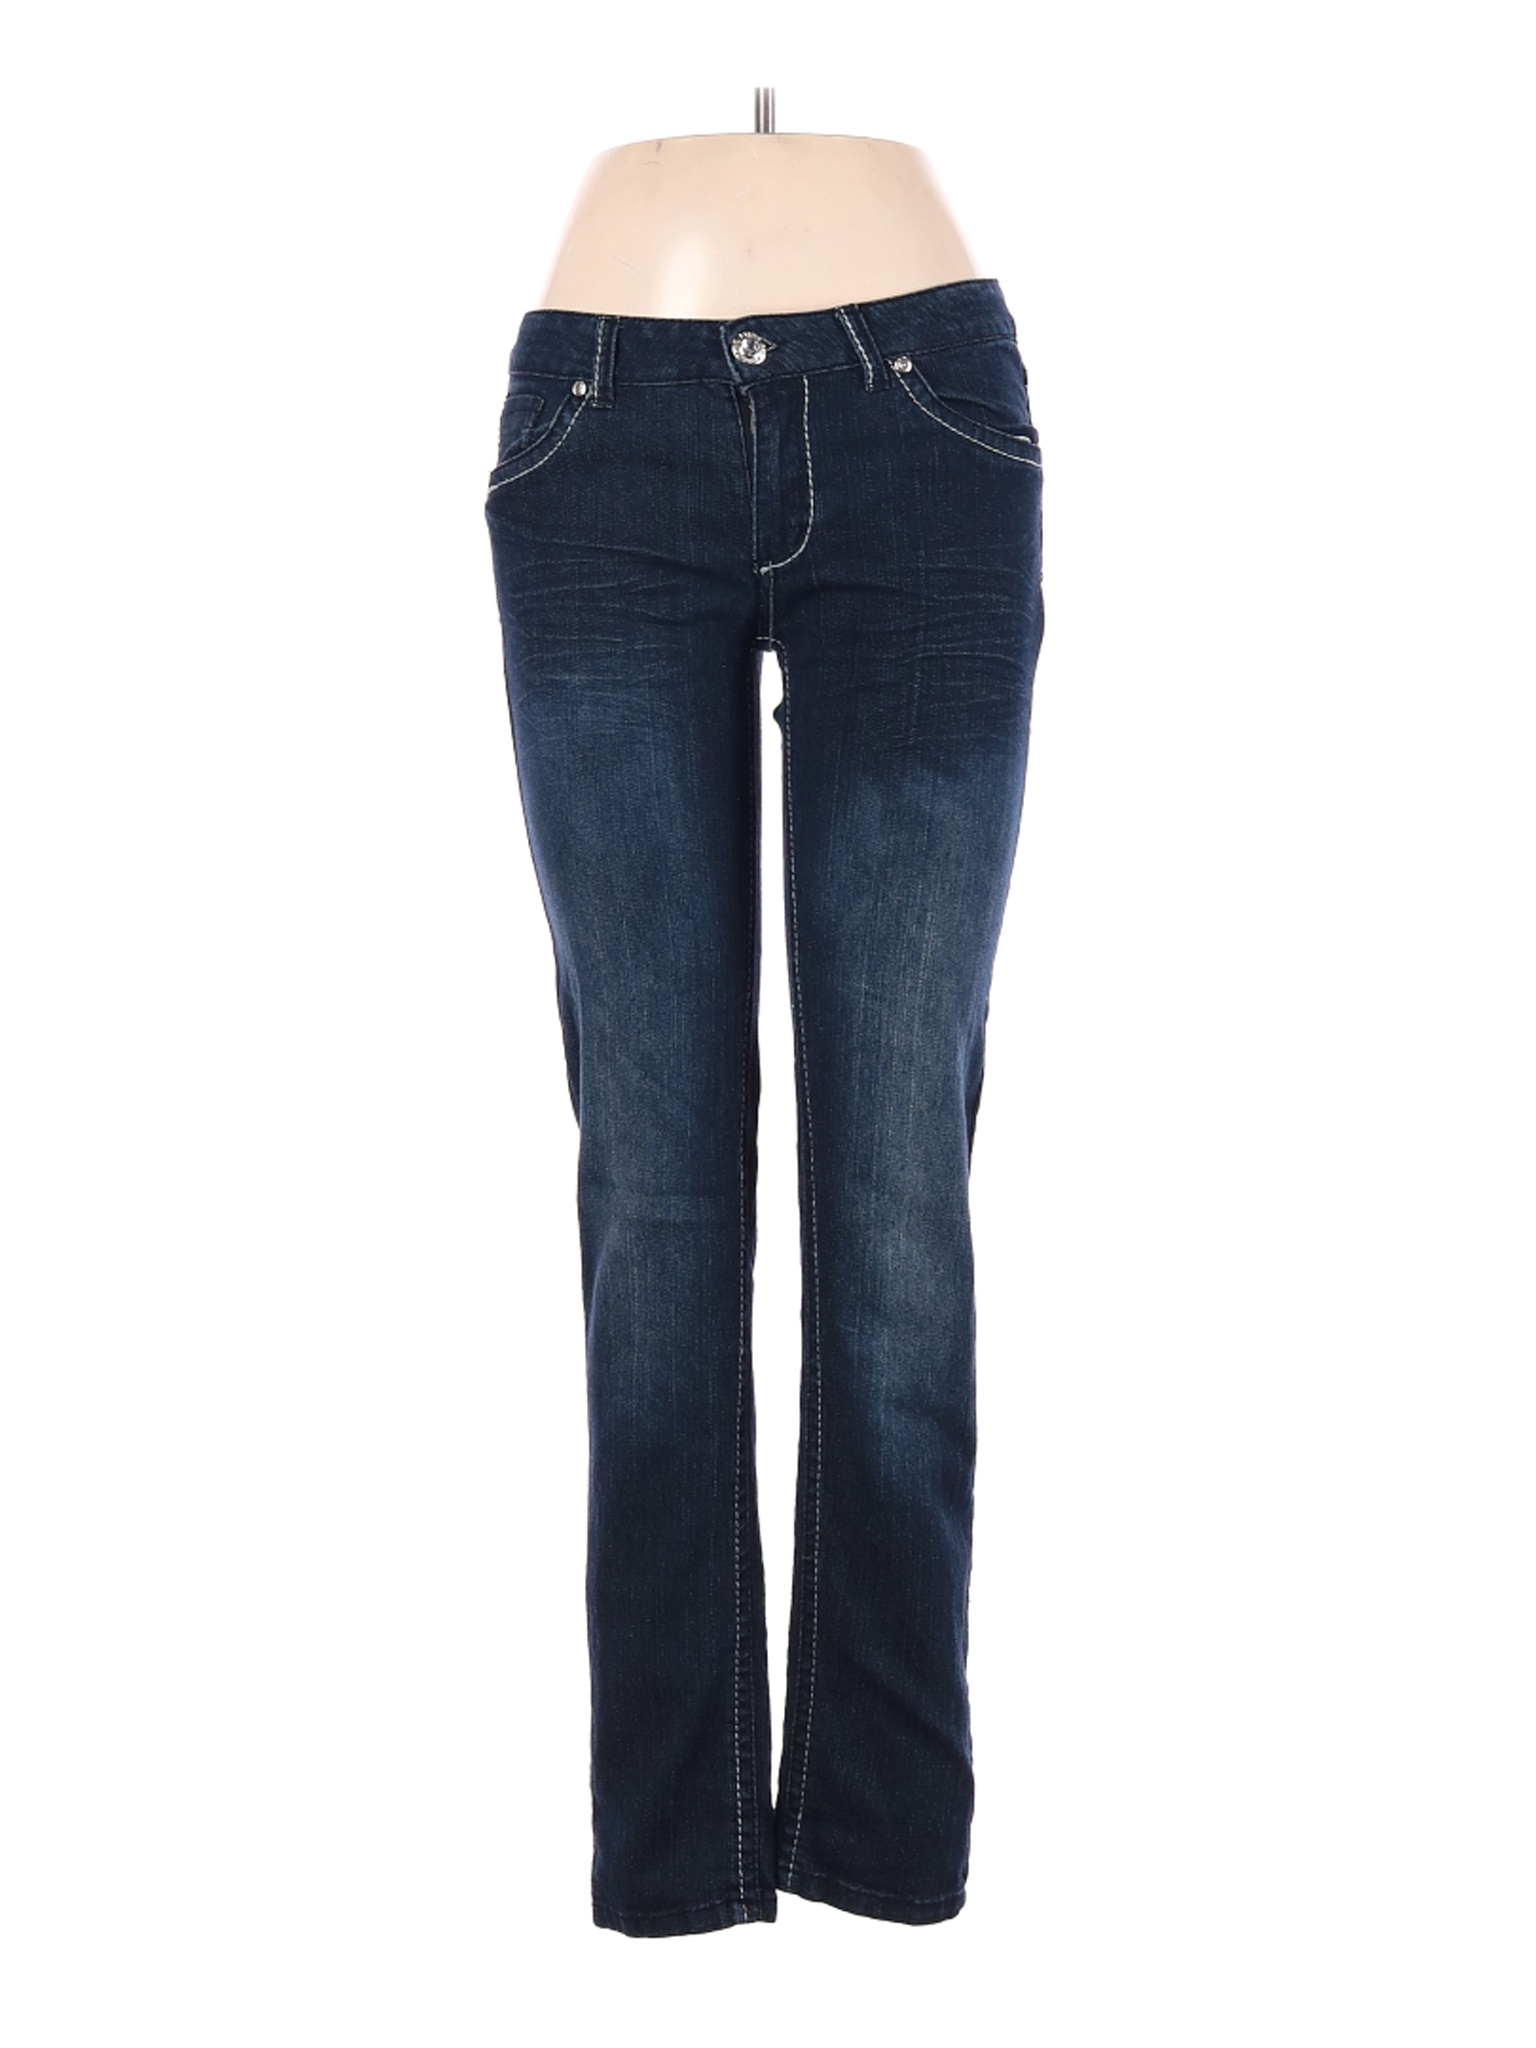 F&F Clothing Women Blue Jeans 9 | eBay